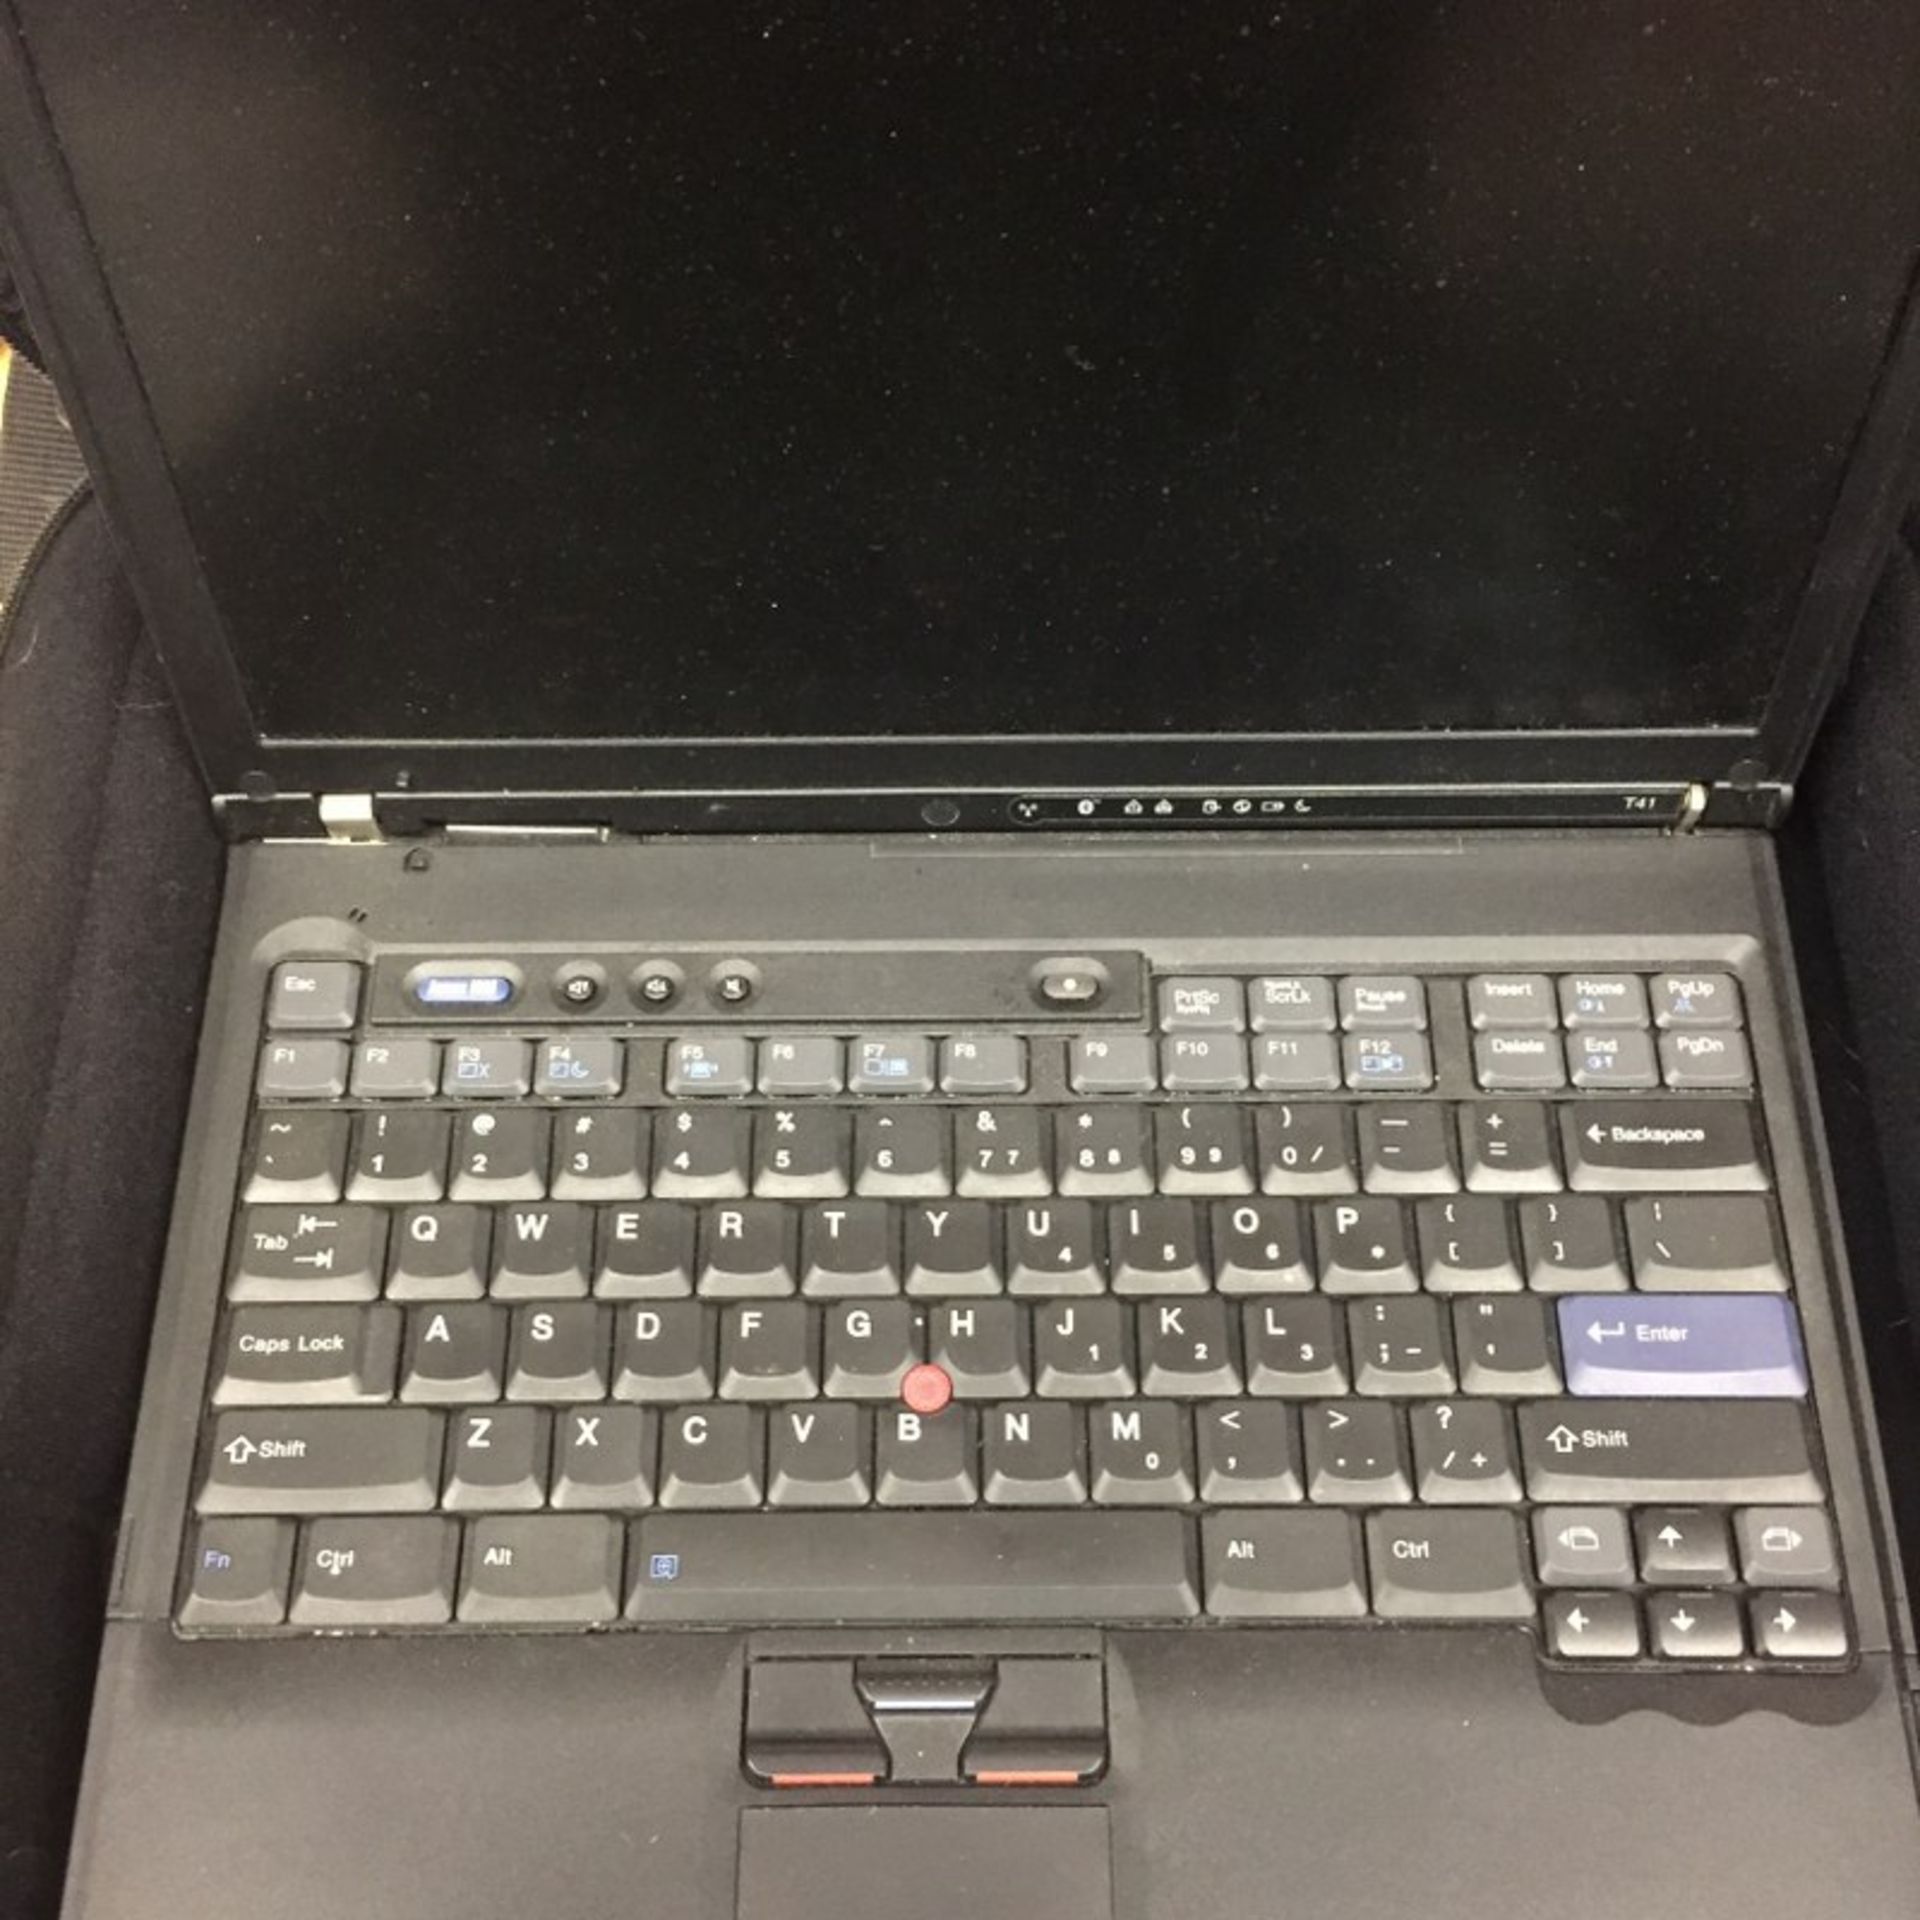 IBM Thinkpad Type 2373 with Leather Bag - Image 3 of 3